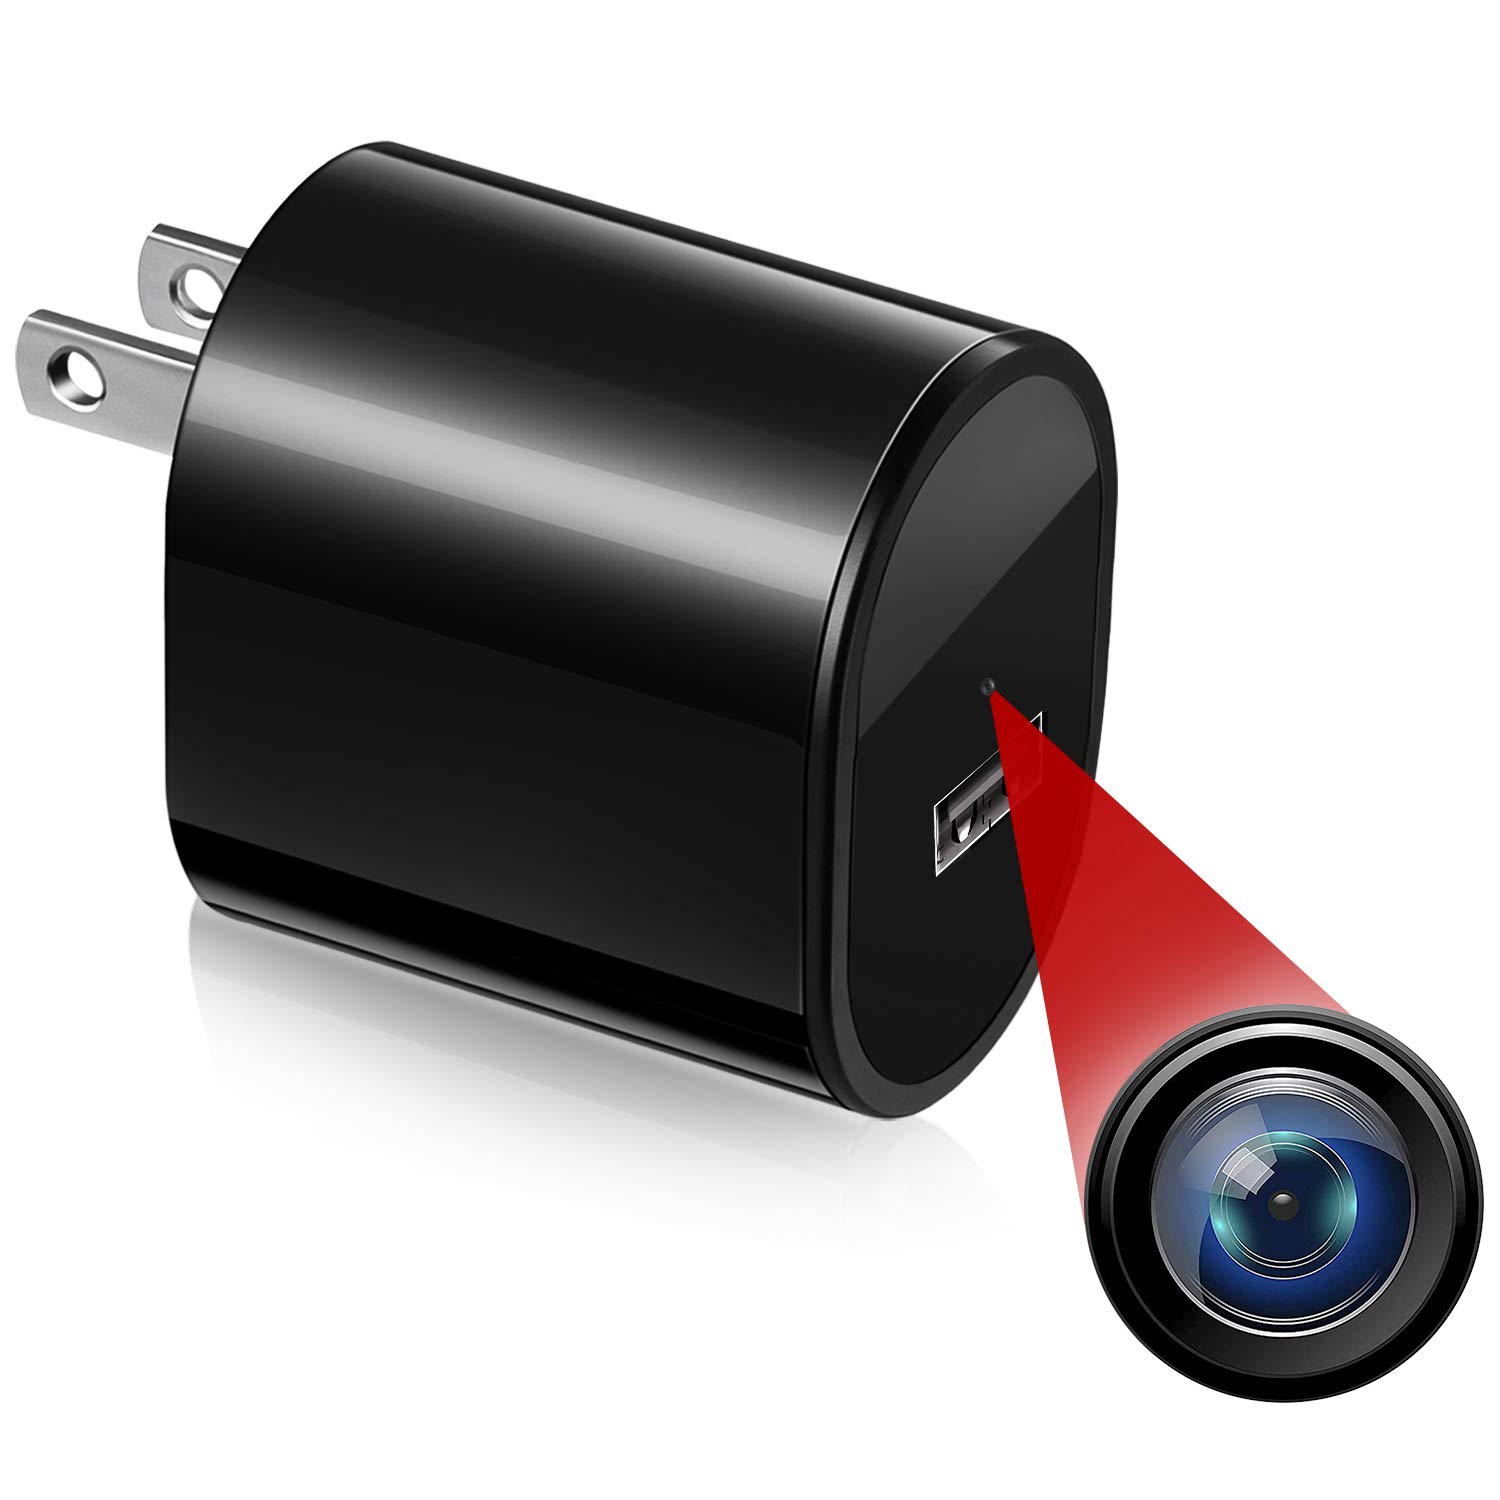 Book Cover Hidden Spy Camera Mini Surveillance - Rovtop Security Cameras for Homes with Video HD 1080P, Motion Detection Portable USB Camera, Small Nanny Cam